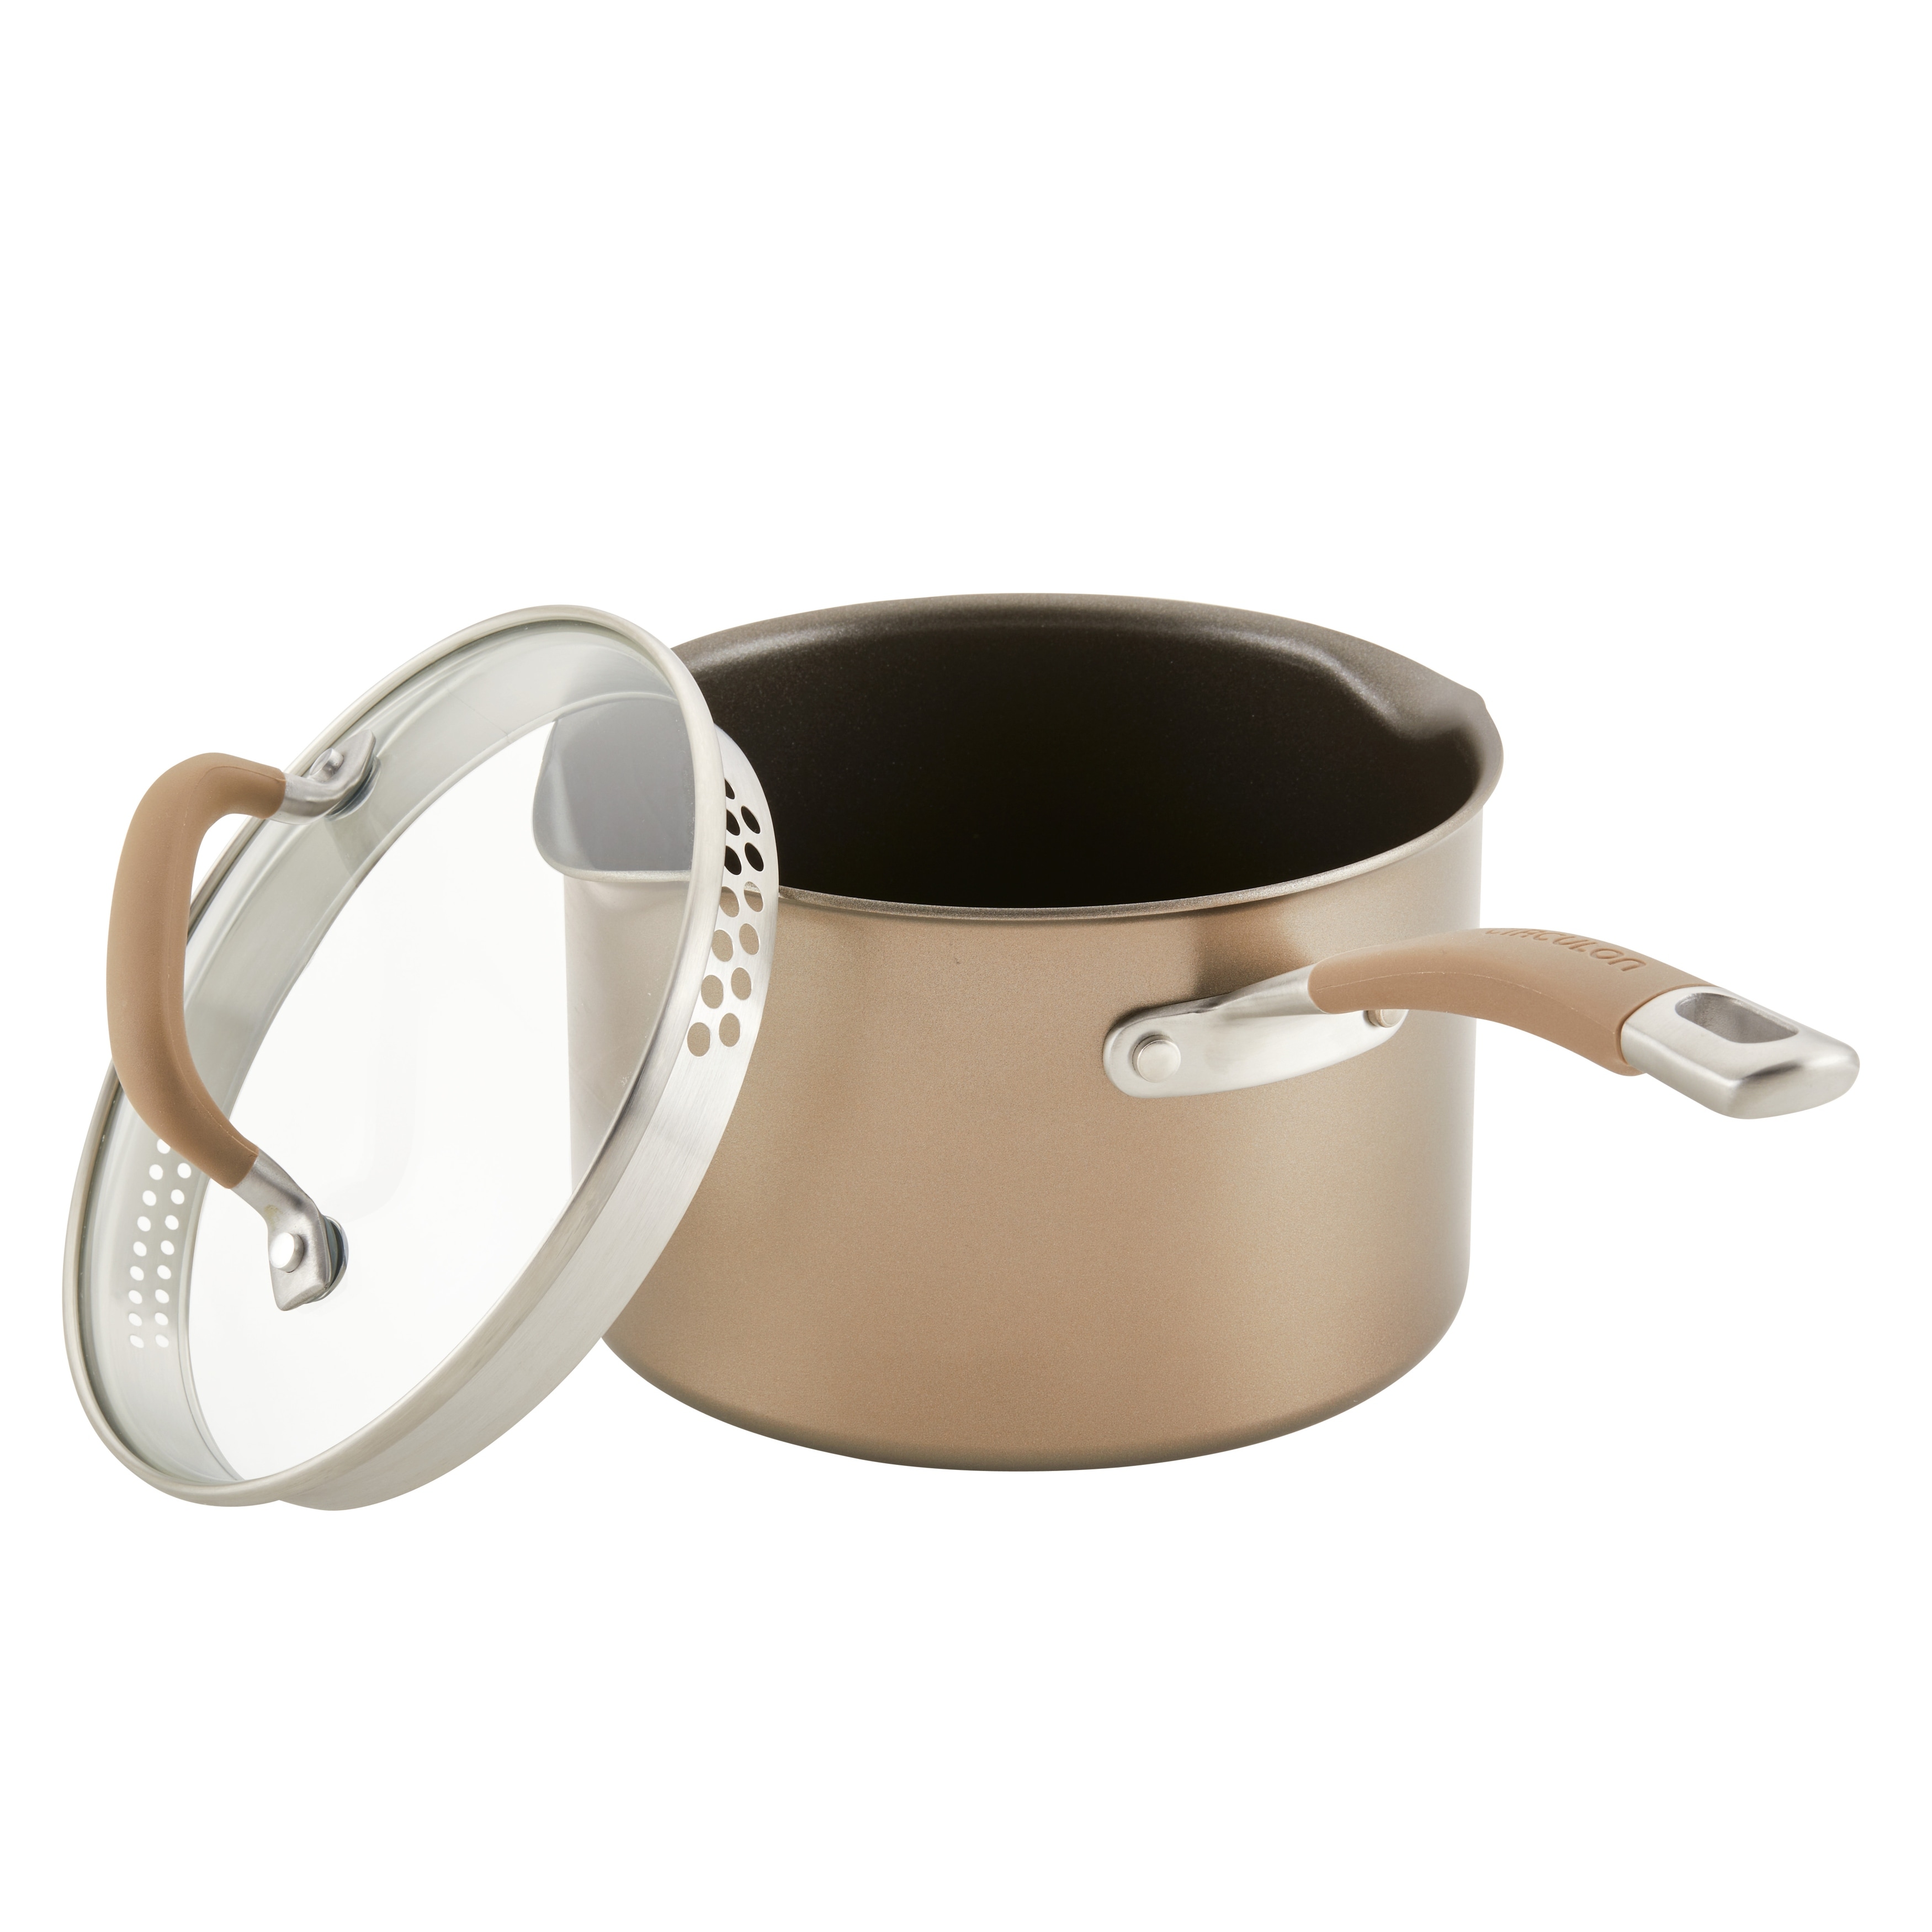 Anolon Advanced Bronze Hard Anodized Nonstick Cookware Set, 9 pc, Gray -  Bed Bath & Beyond - 37033694